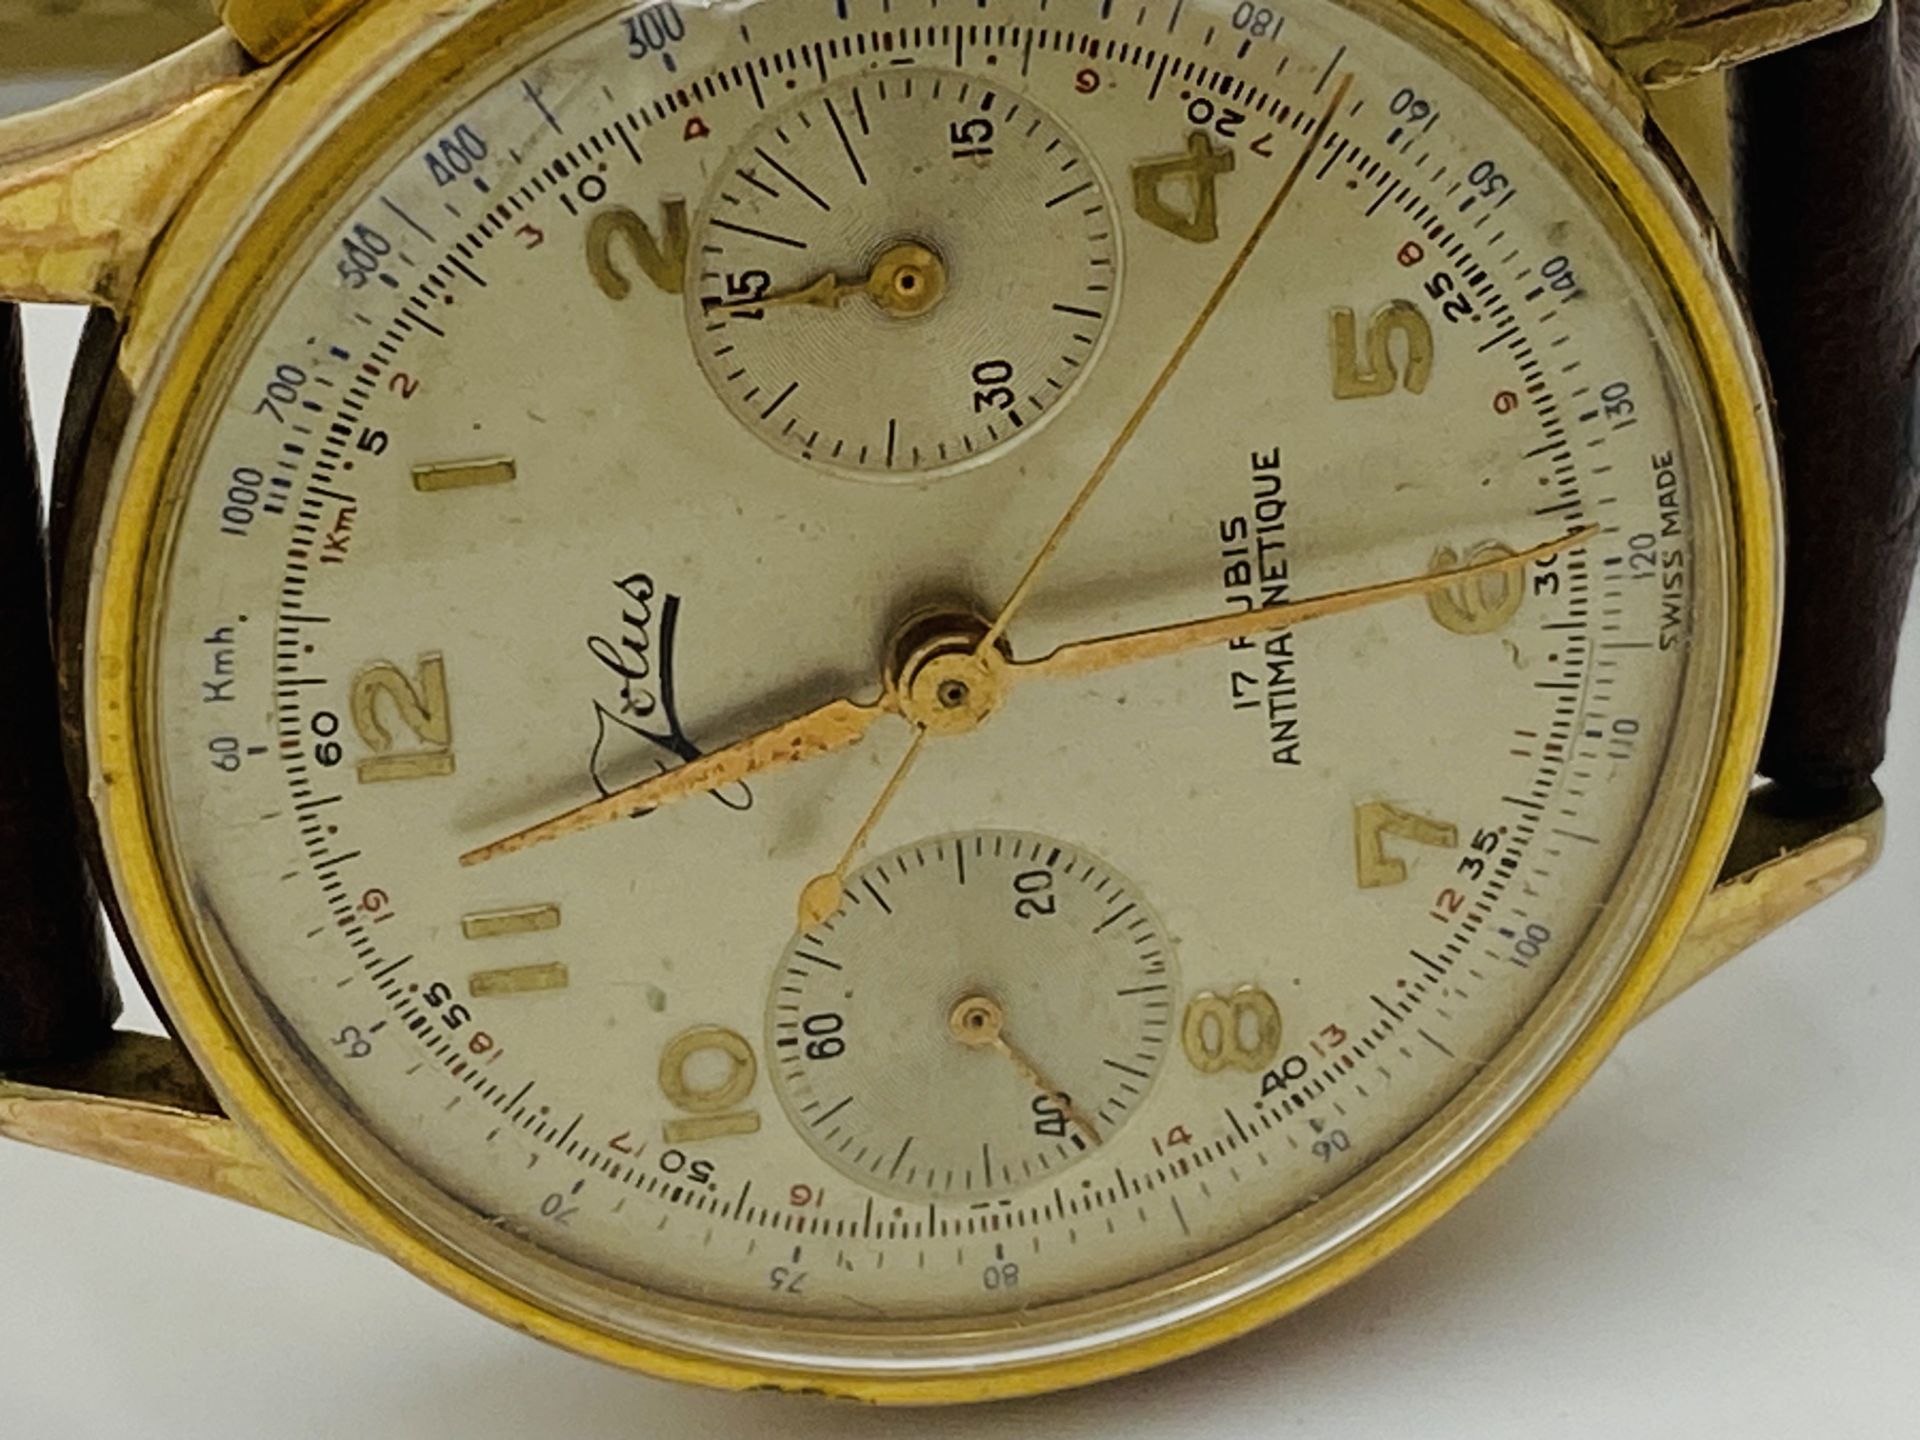 Jolus gents chronograph wrist watch - Image 5 of 8